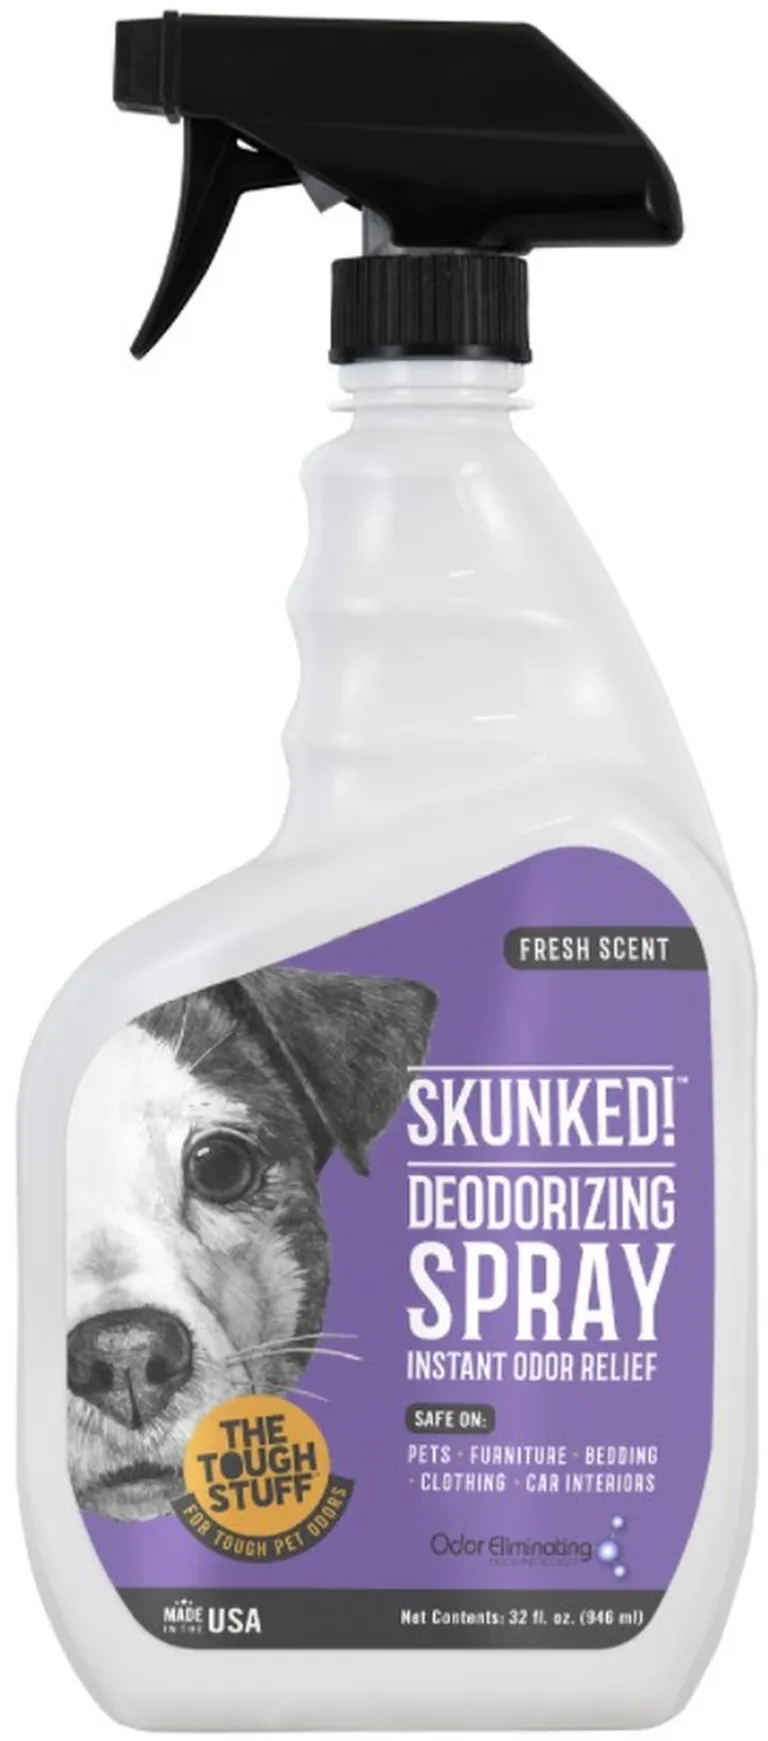 Nilodor Skunked! Multi-Surface Deodorizing Spray Photo 1